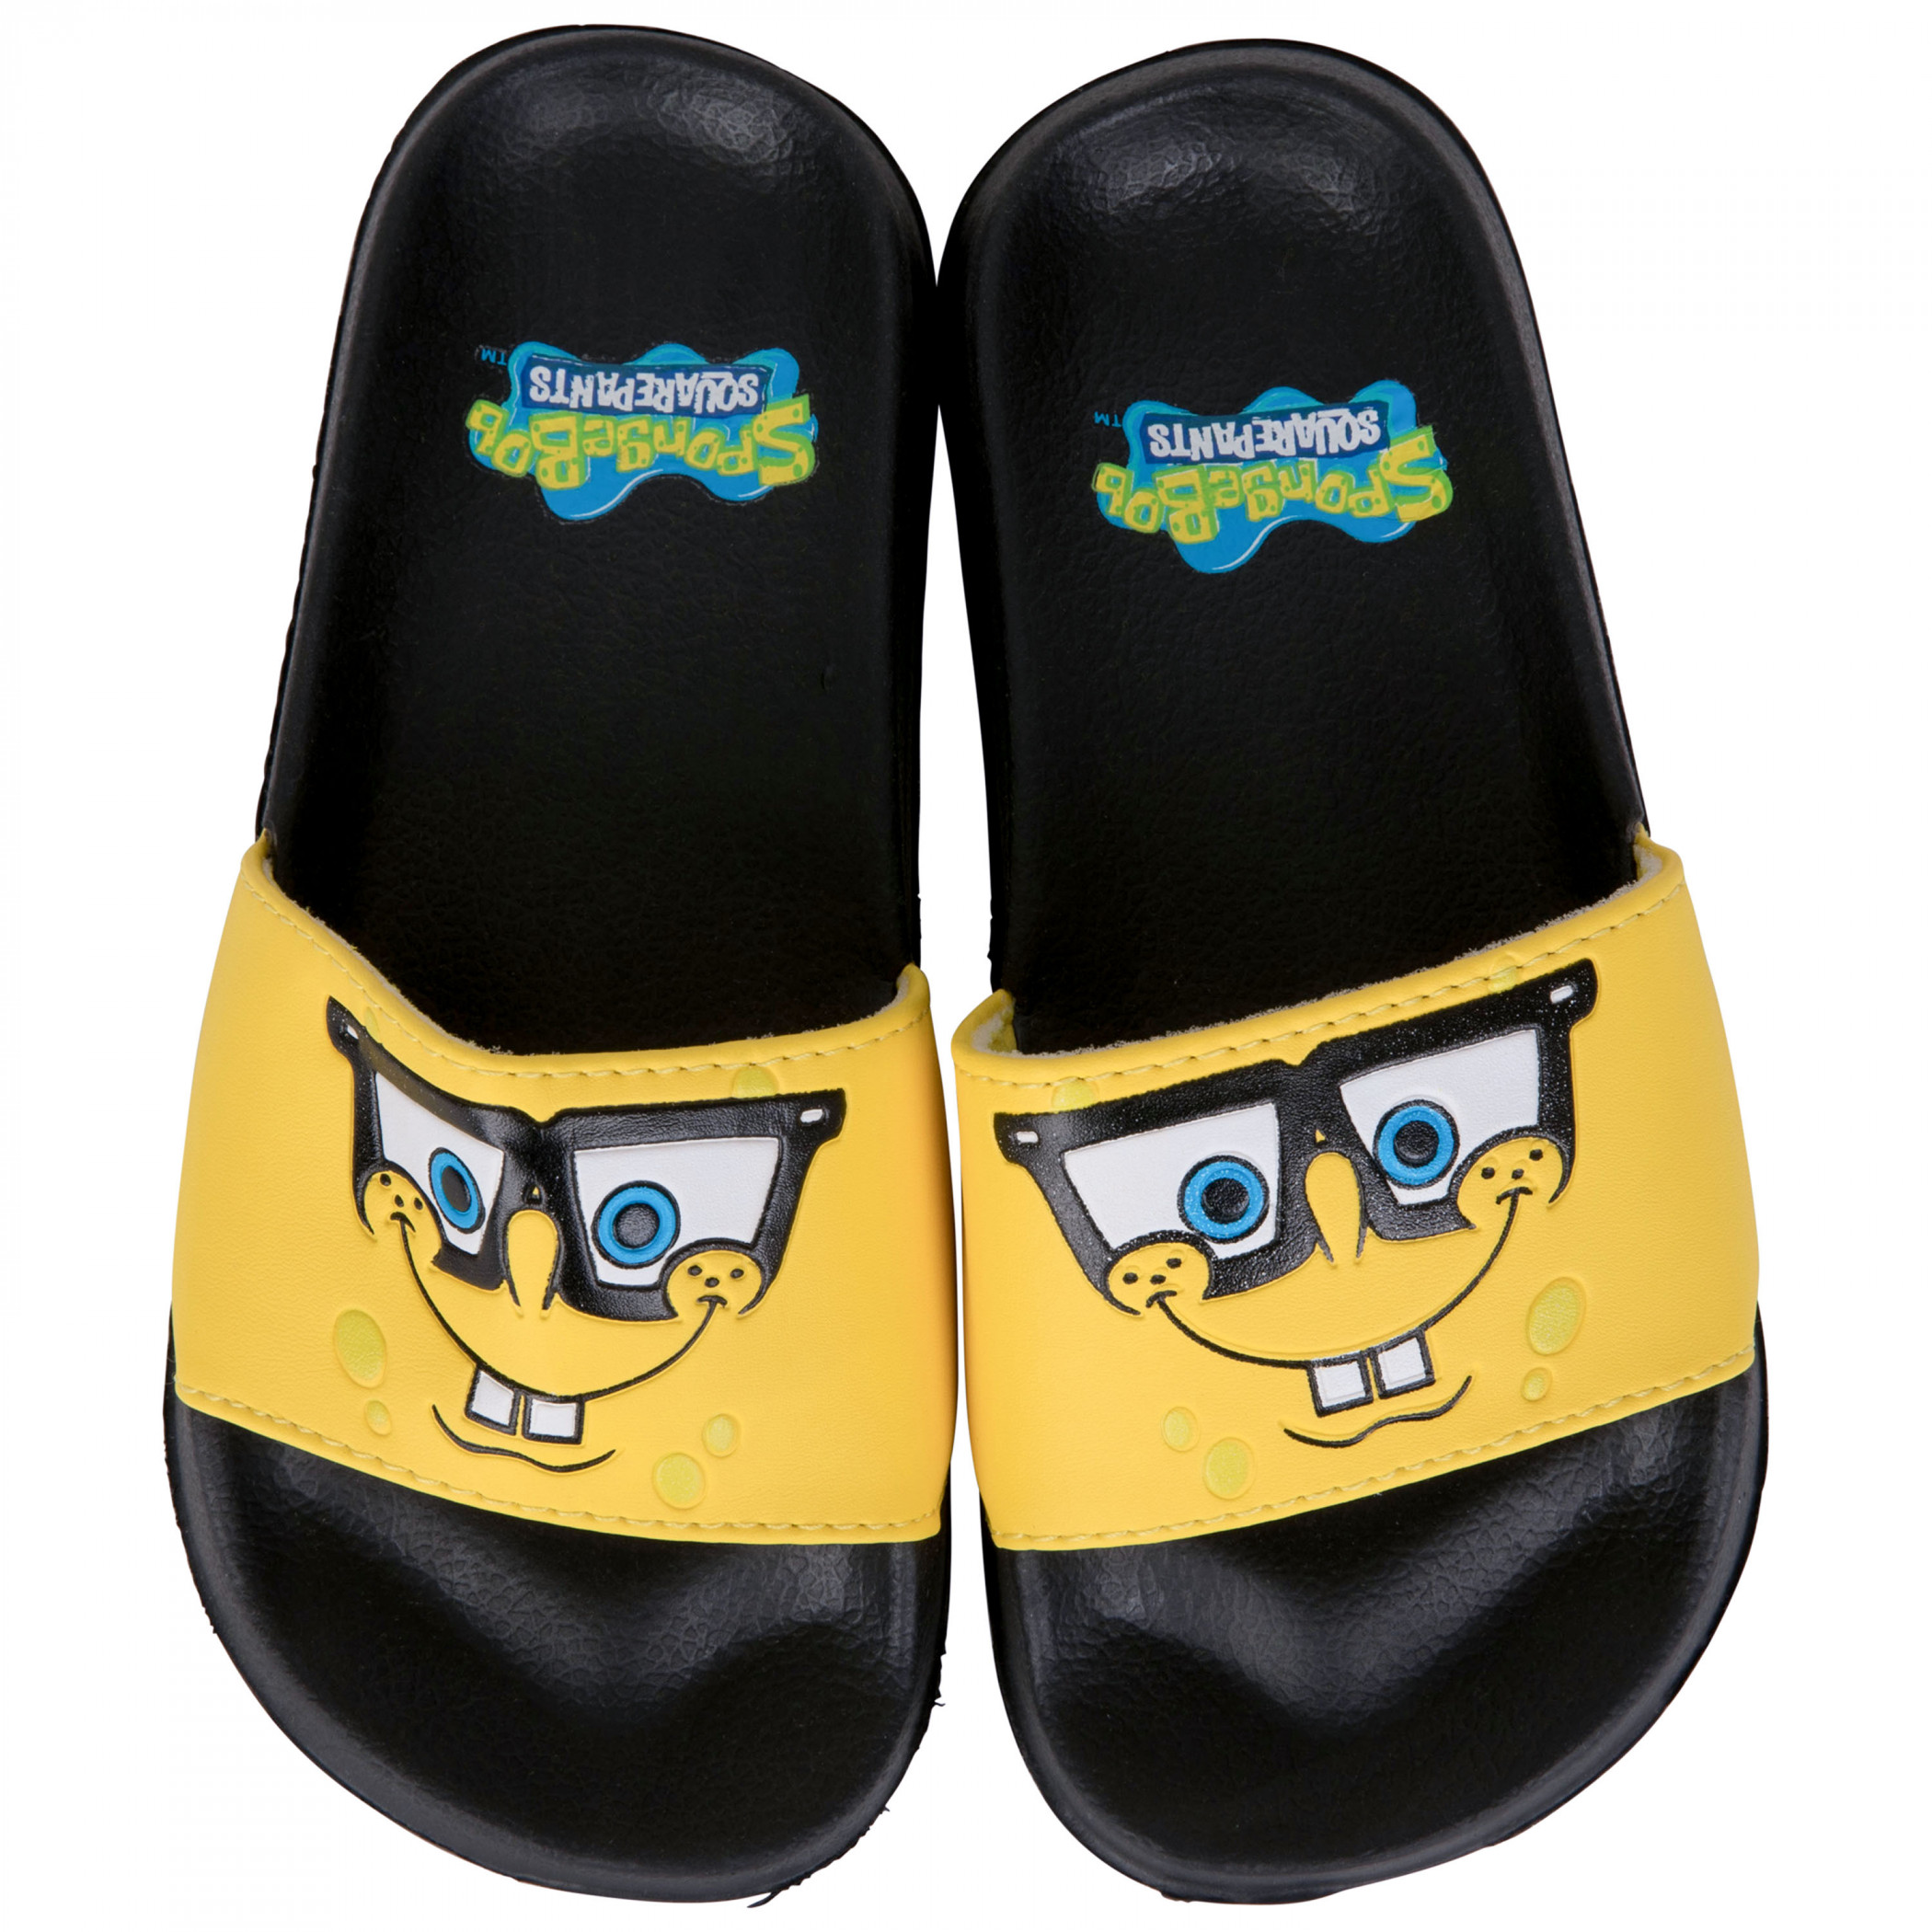 SpongeBob SquarePants Jellyfishing Time Boy's Slide Sandals